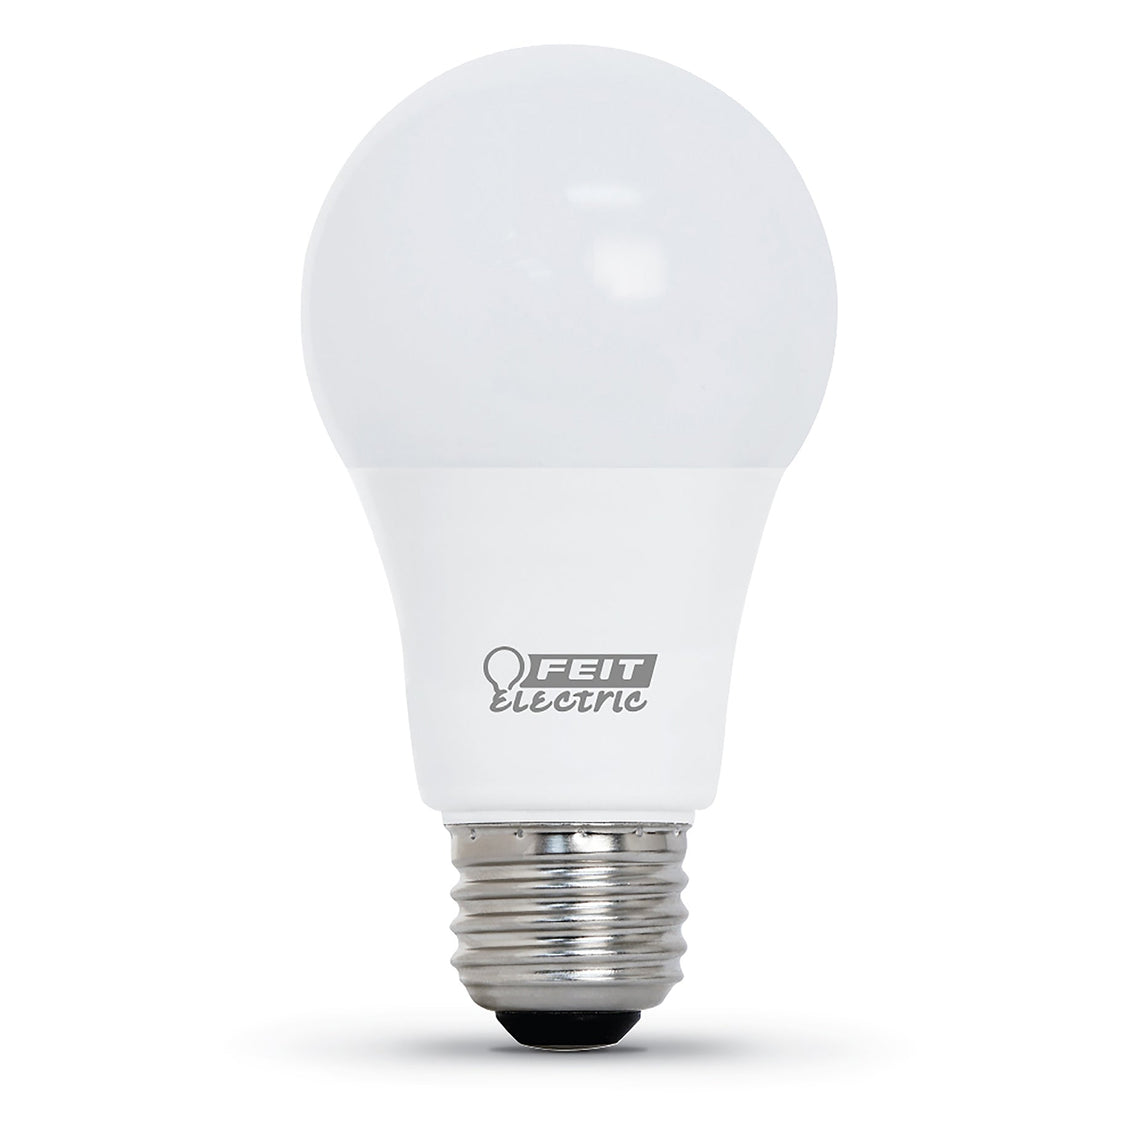 LED Light Bulb A19 60W, Non-Dimmable, 800 Lumens, 3000K, E26 Base